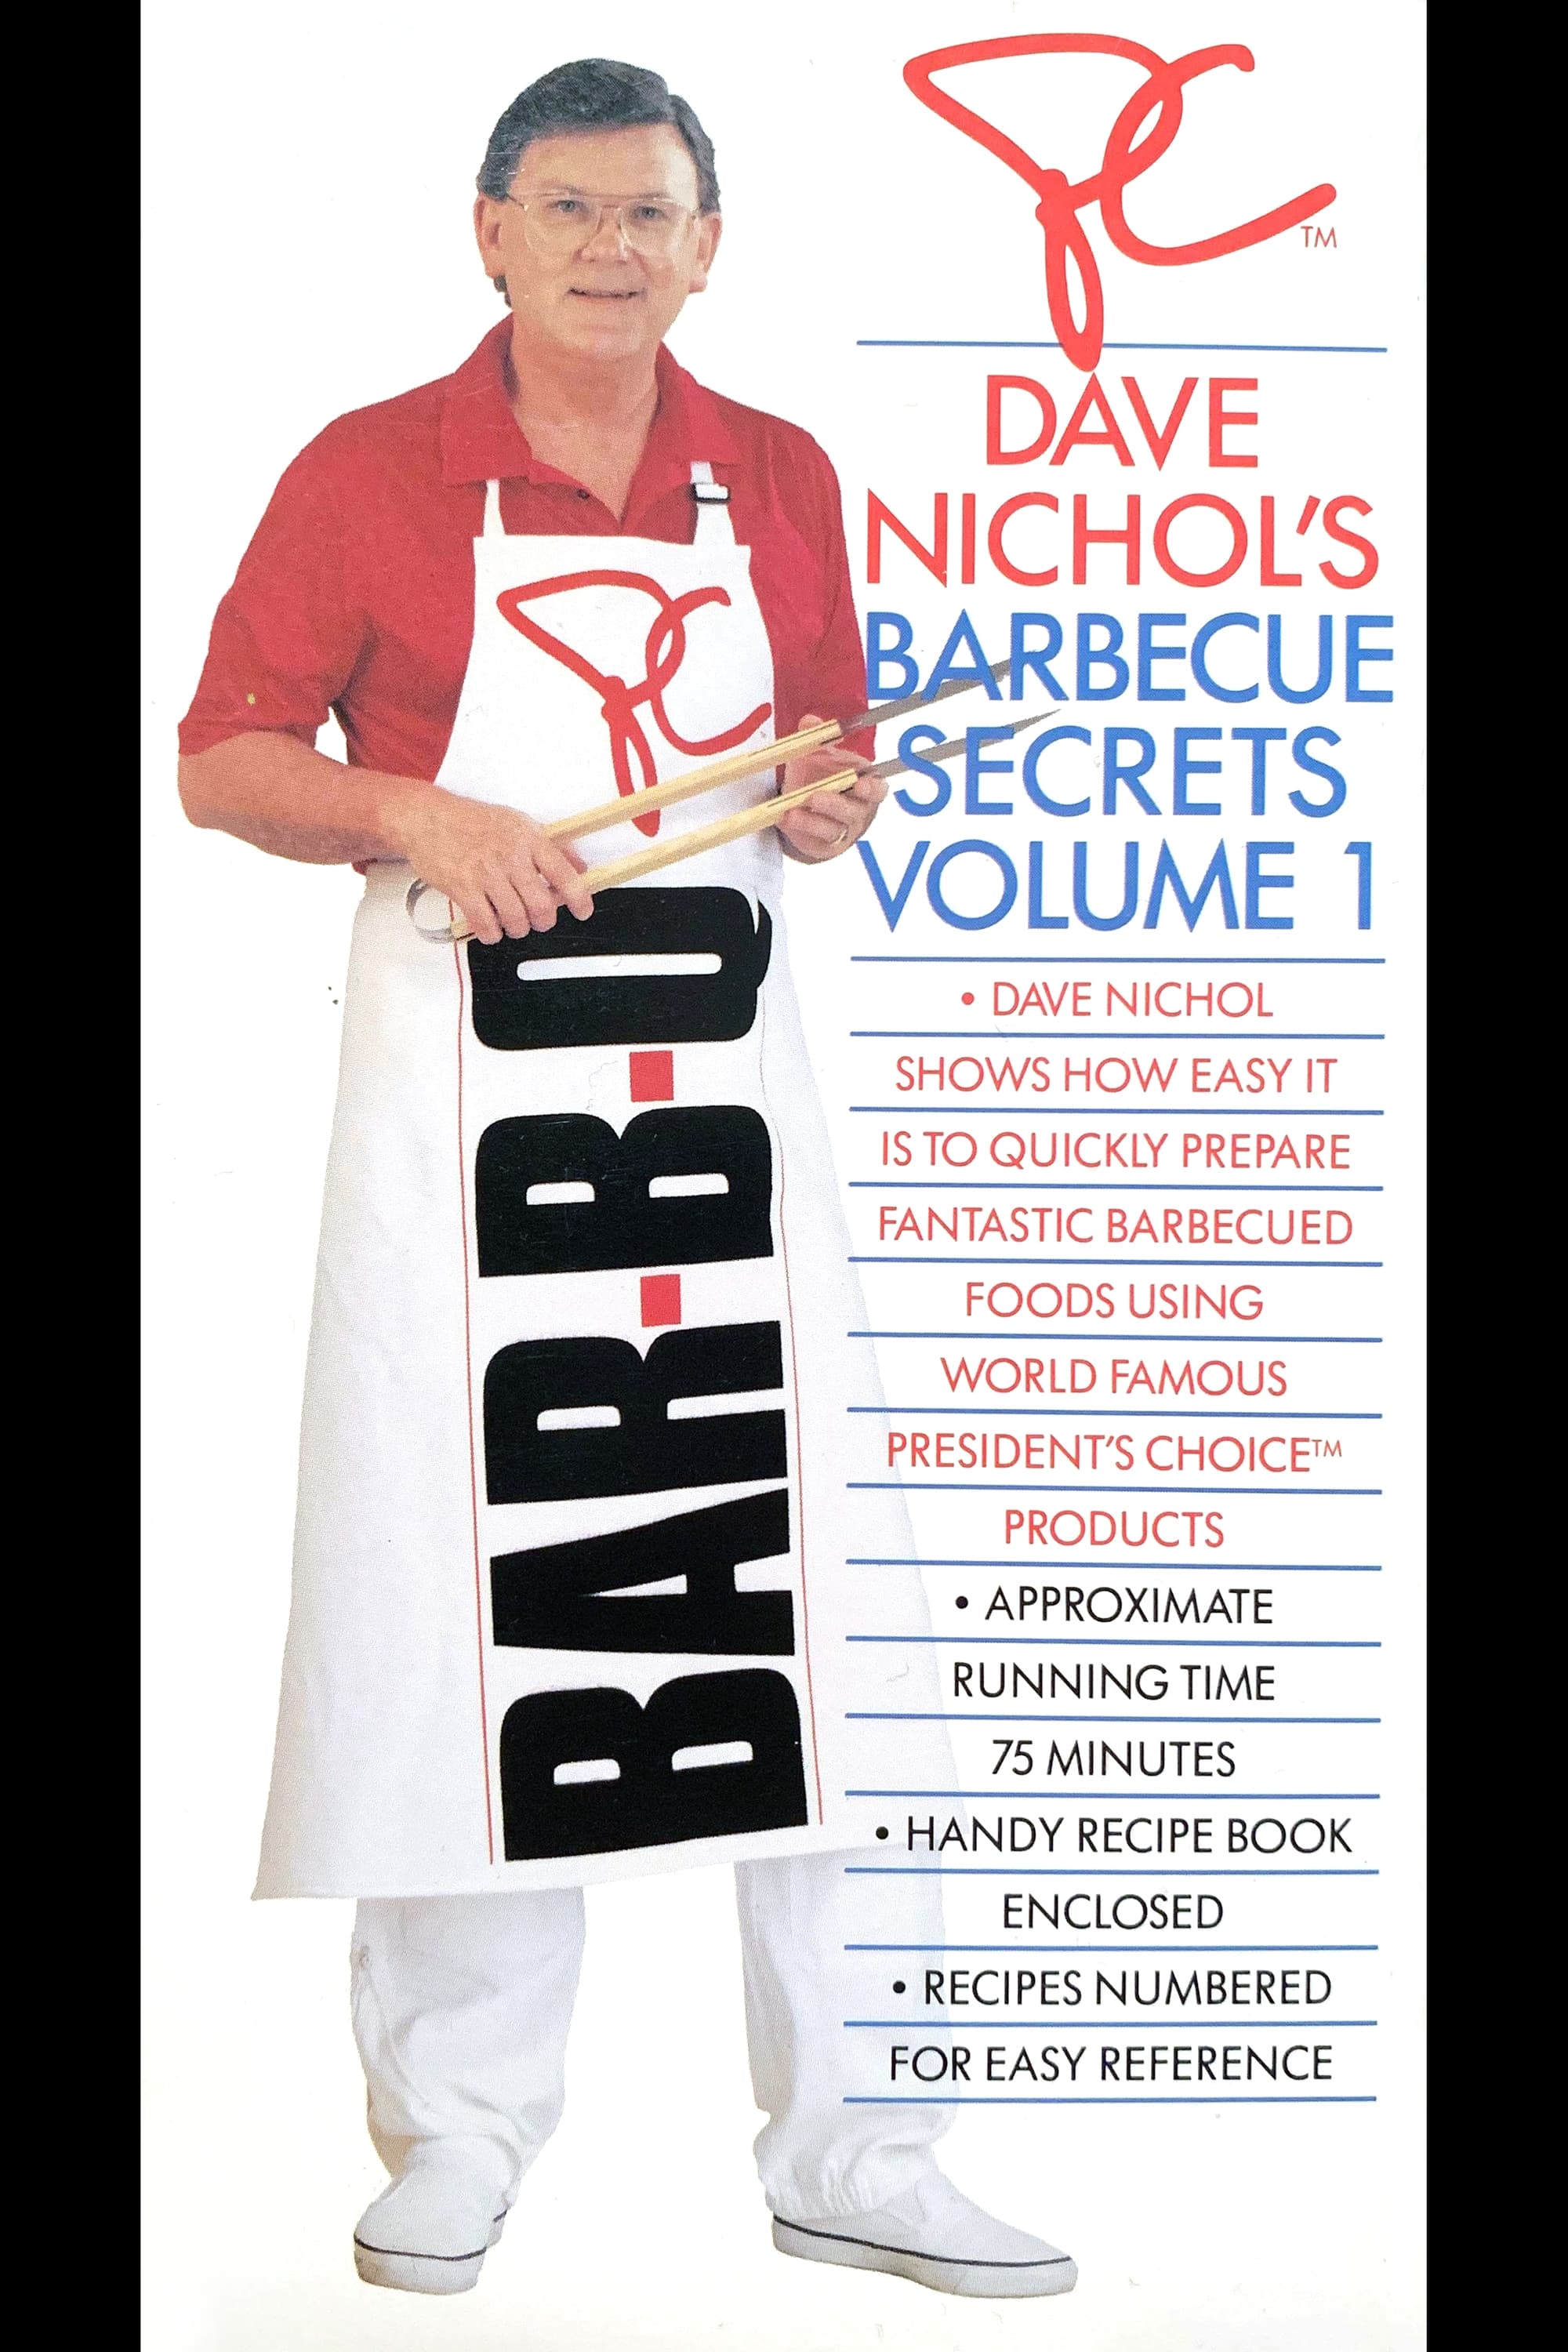 Dave Nichol's Barbecue Secrets Volume 1